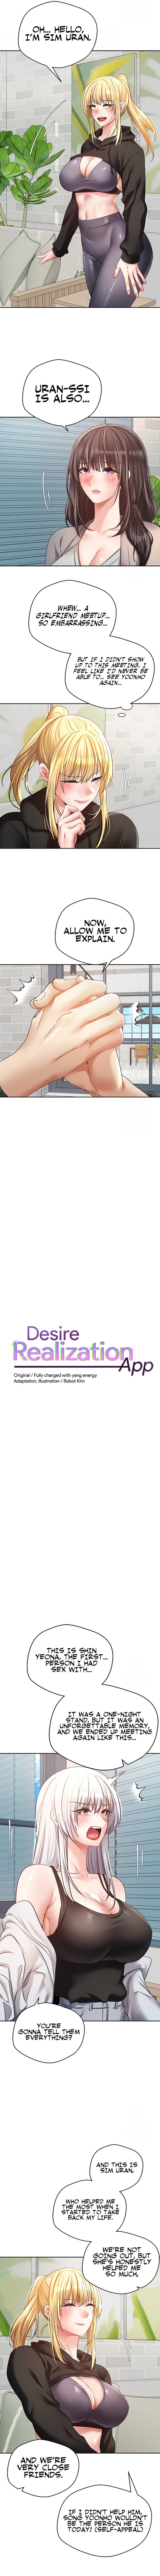 desire-realization-app-chap-57-1